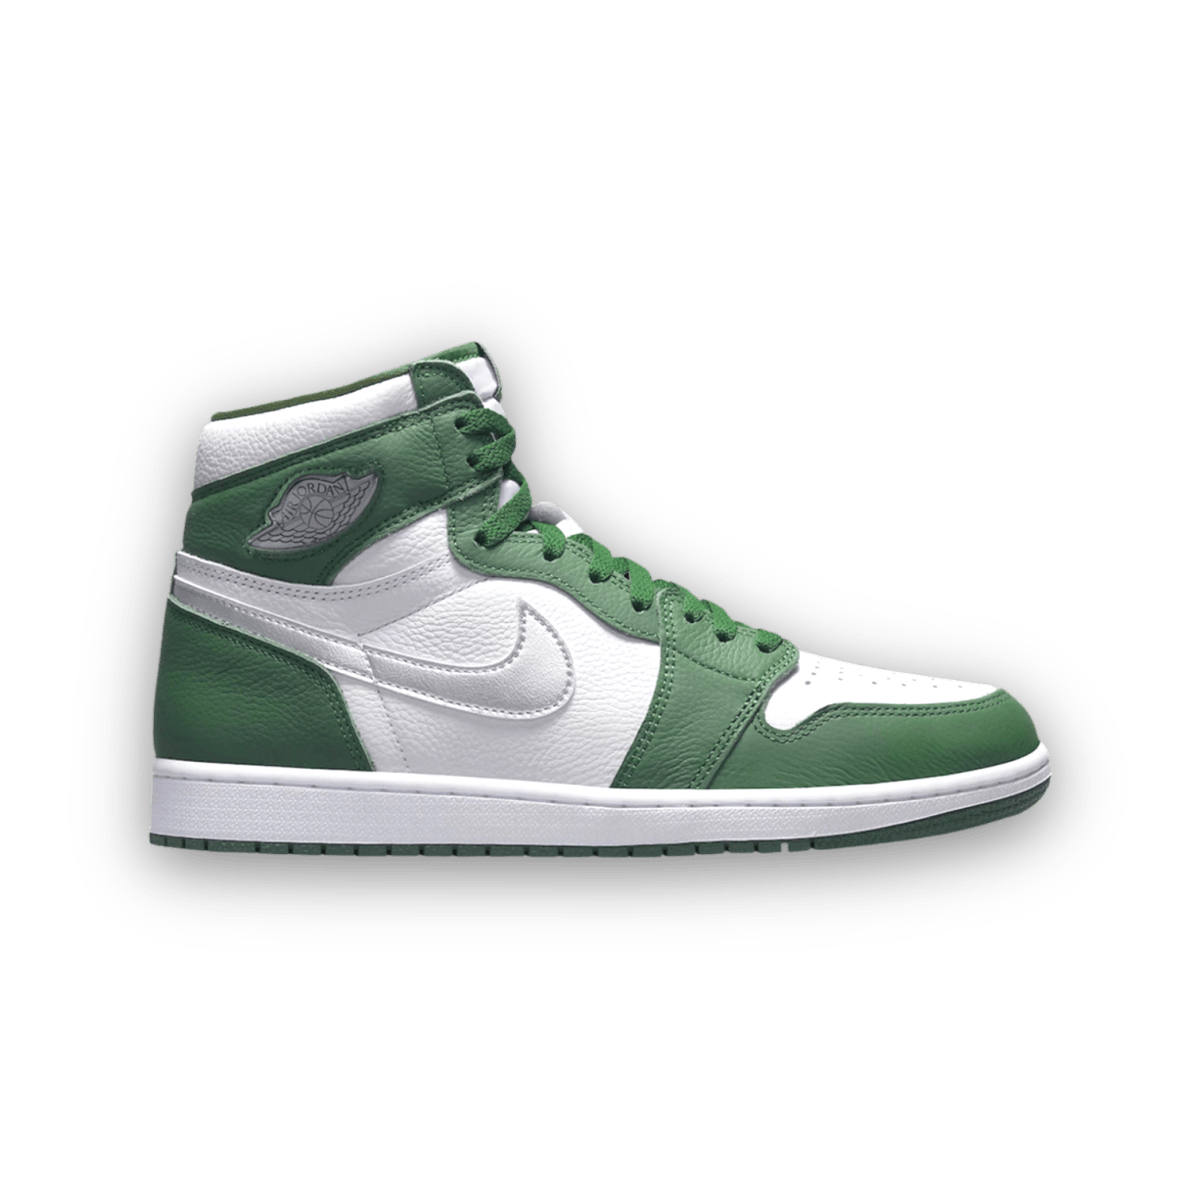 Air Jordan 1 Retro High OG 'Gorge Green' - High Sneaker - Jordan - Jawns on Fire